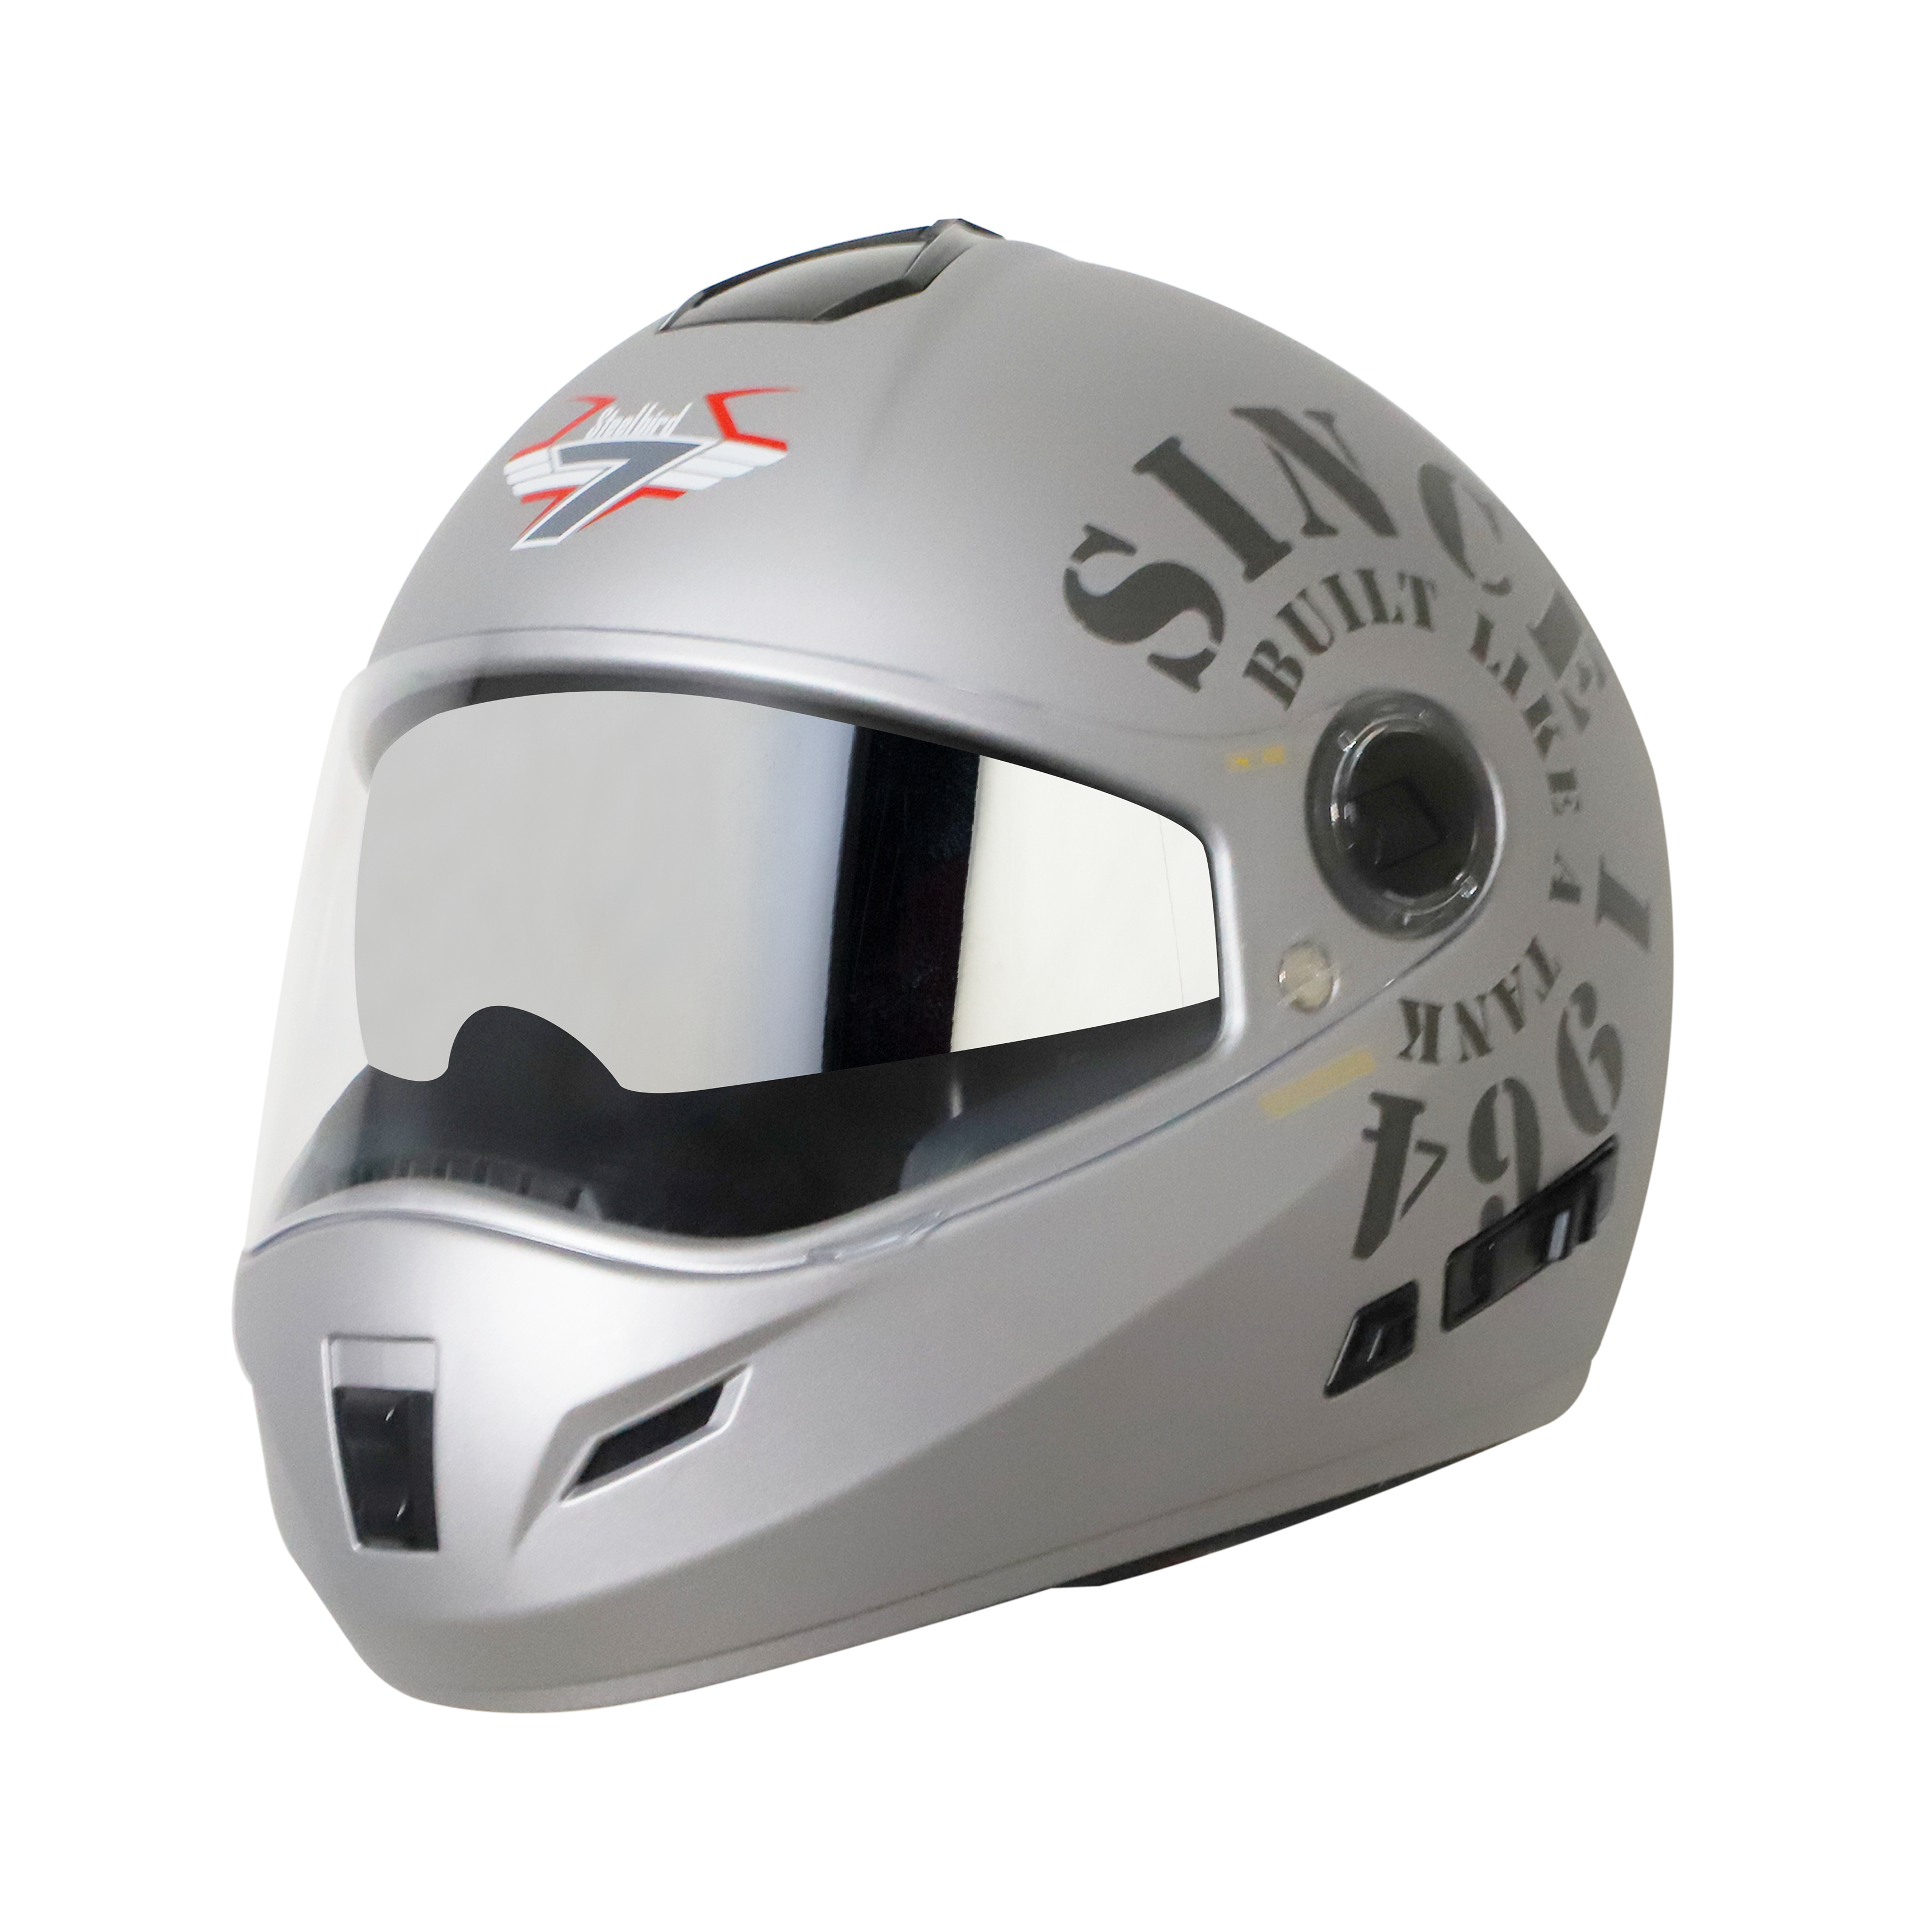 Steelbird Cyborg Tank Full Face Helmet with Chrome Silver Sun Shield, ISI Certified Helmet (Matt Silver Grey)